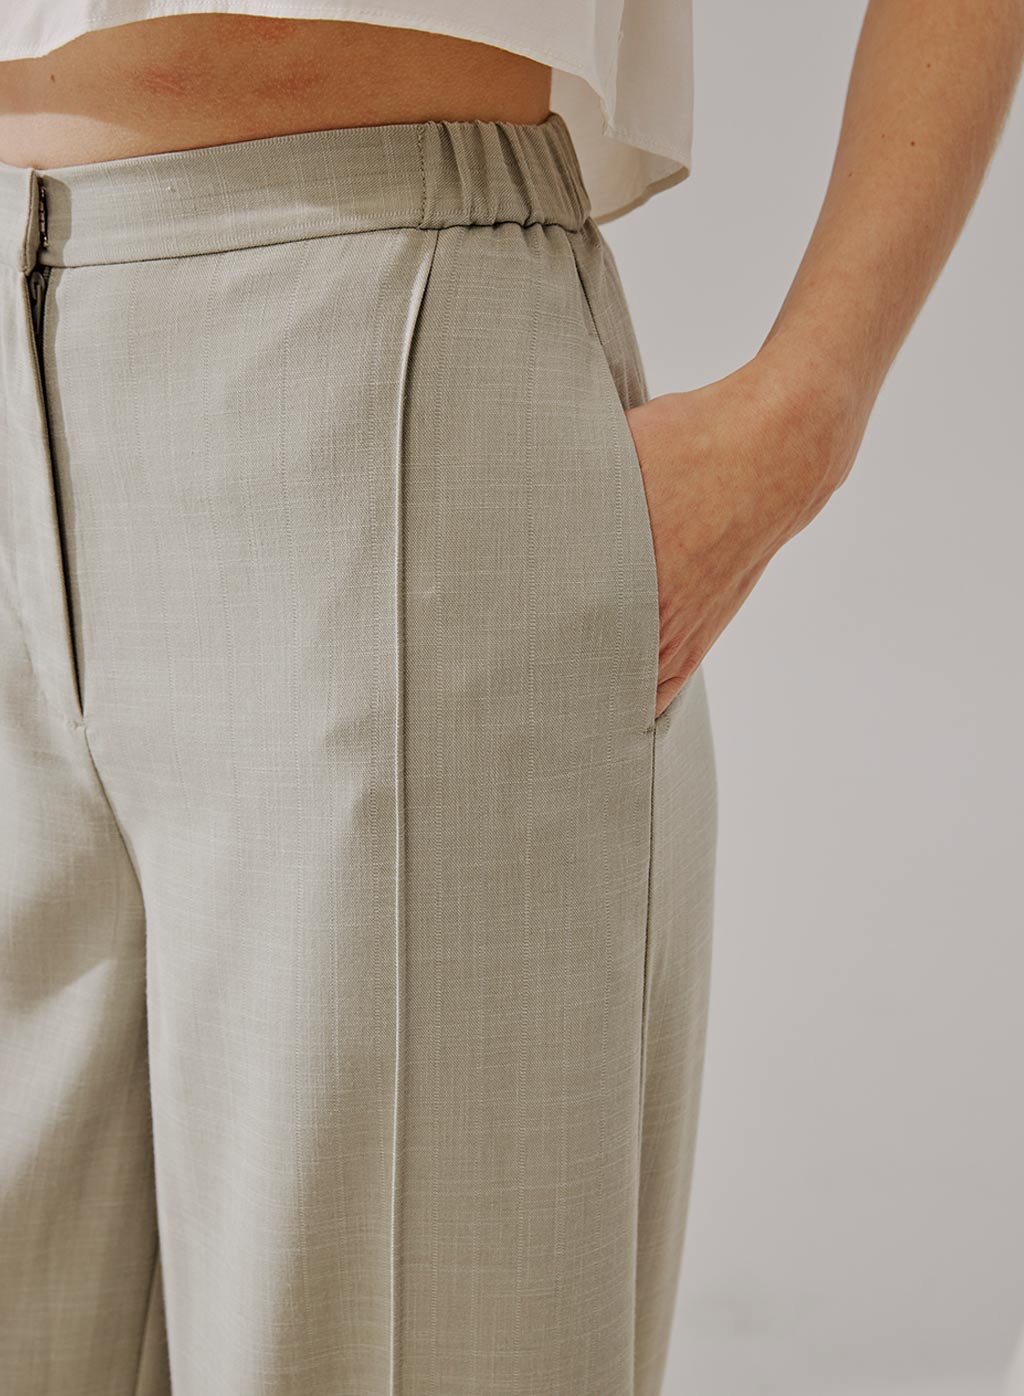  Pants for Women - High Waist Fold Pleated Wide Leg